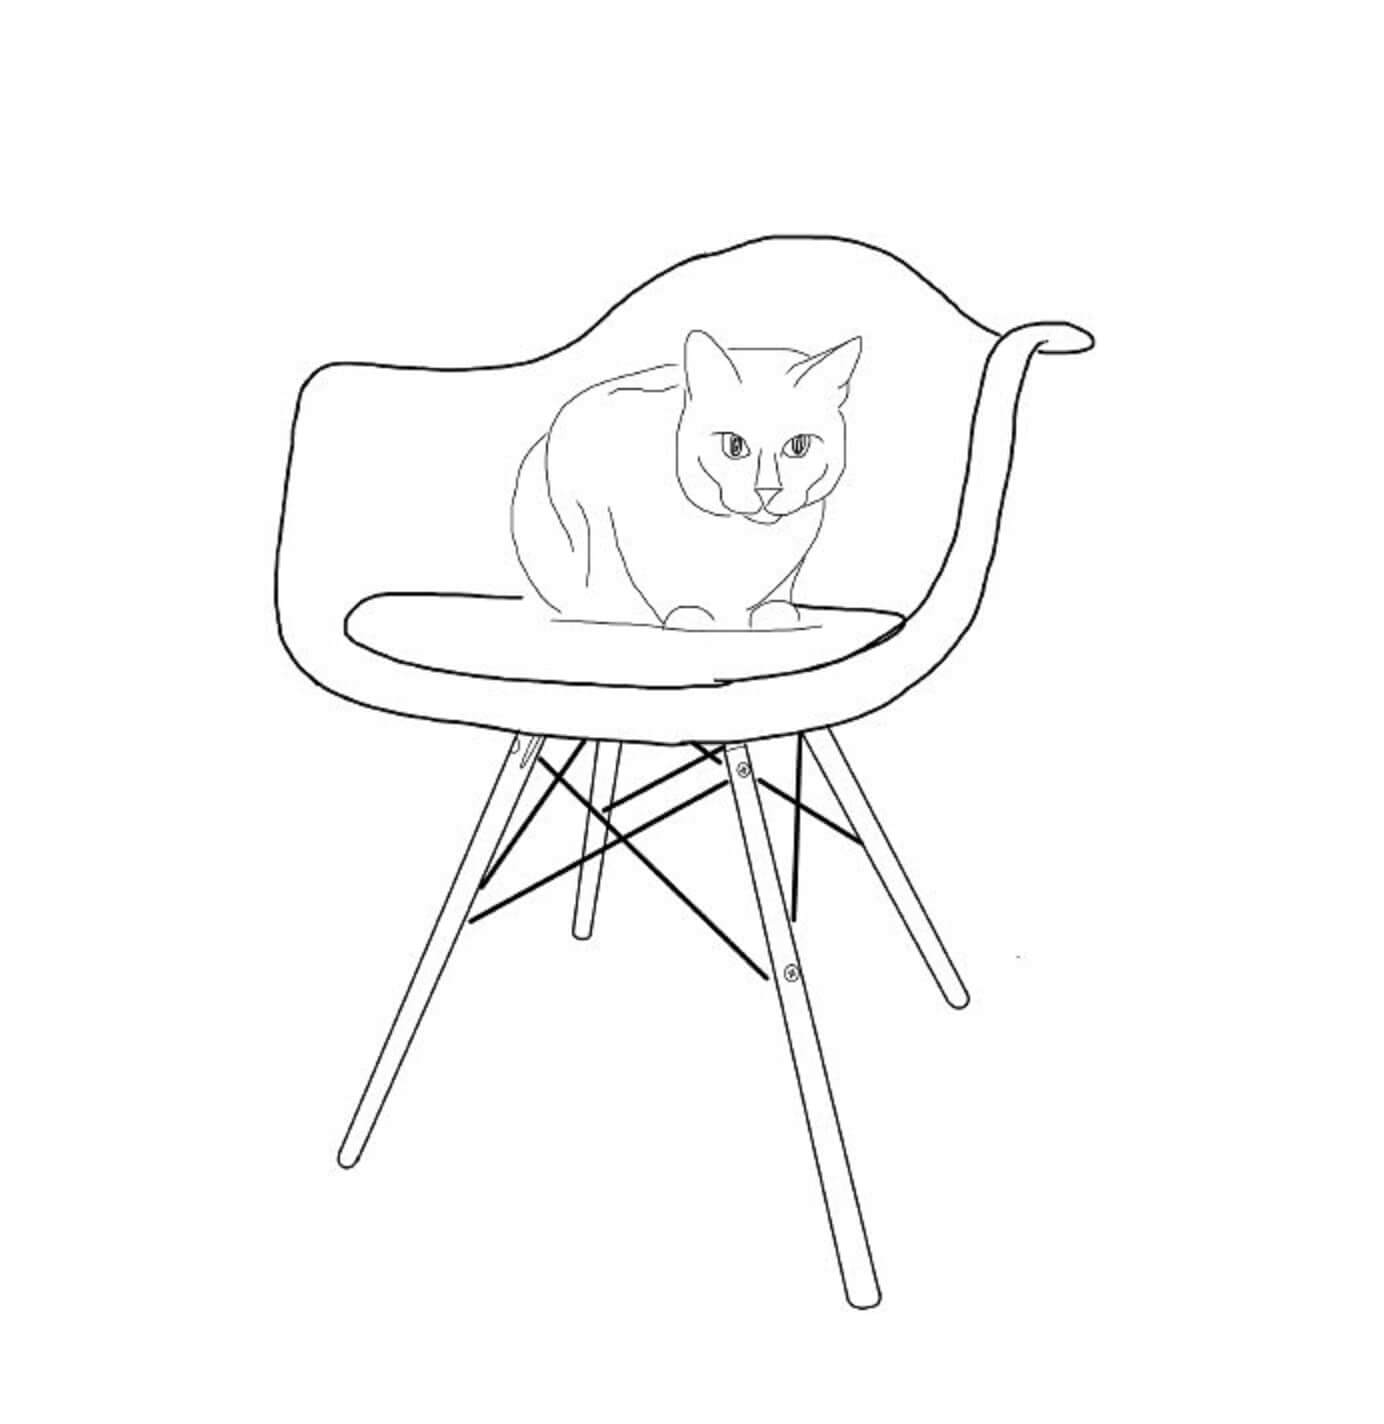 Katze auf Stuhl